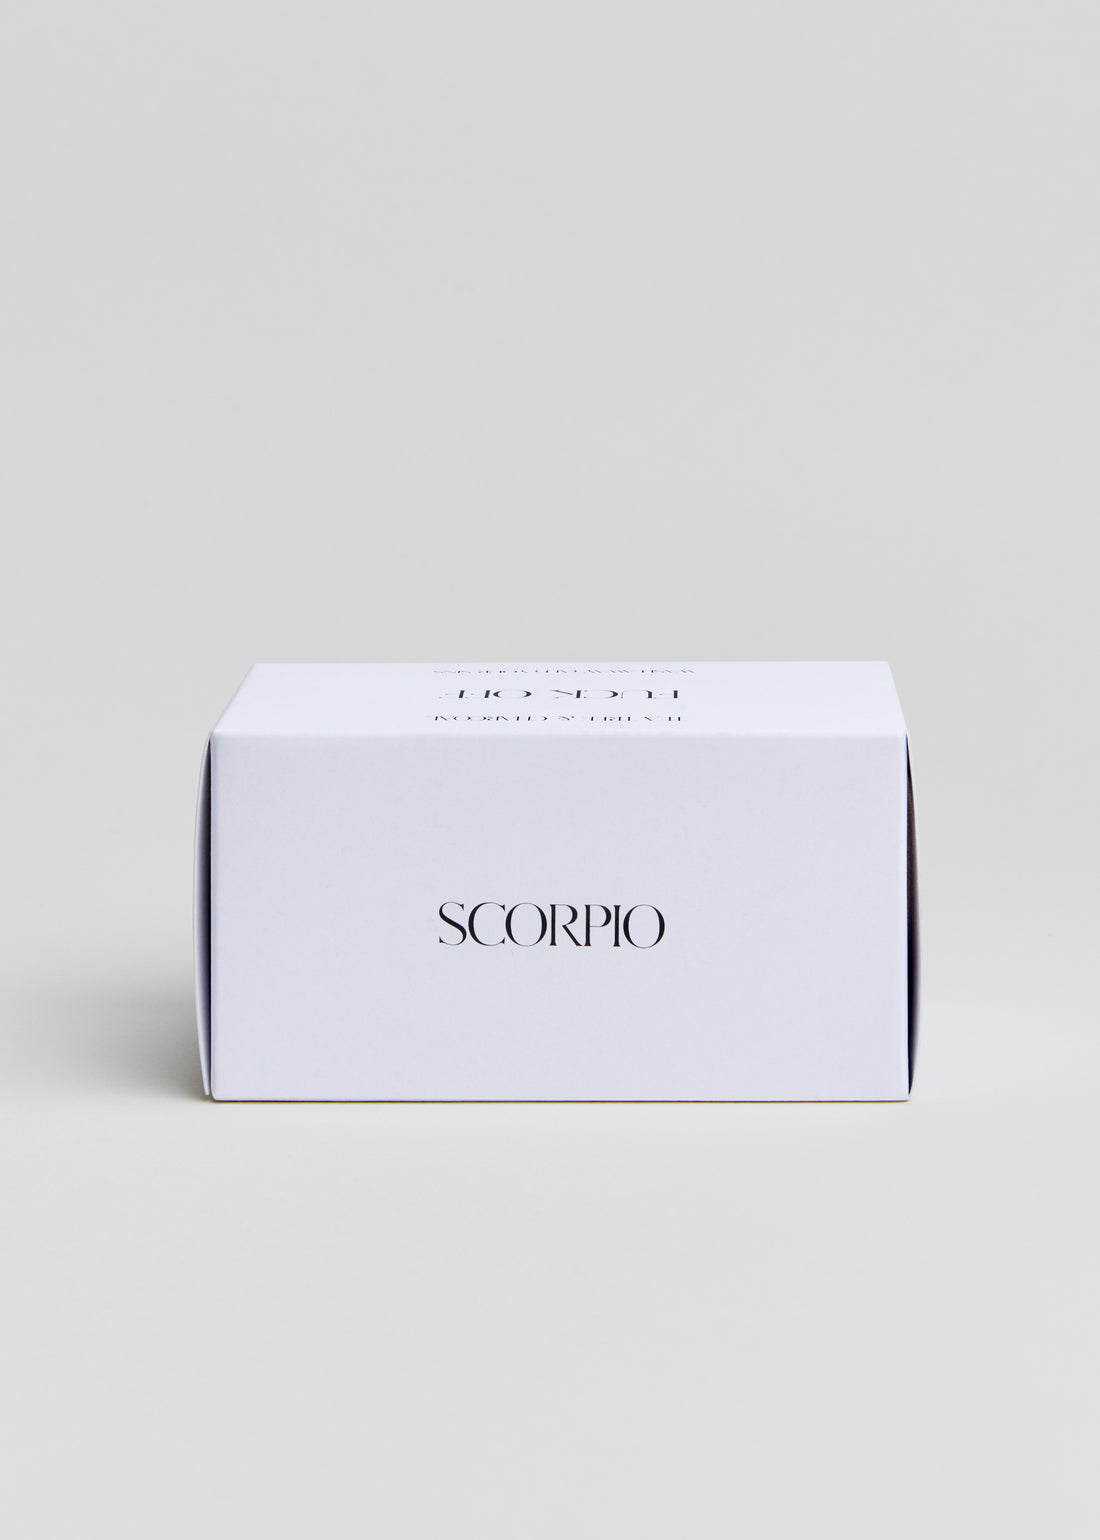 Scorpio Soap Bar